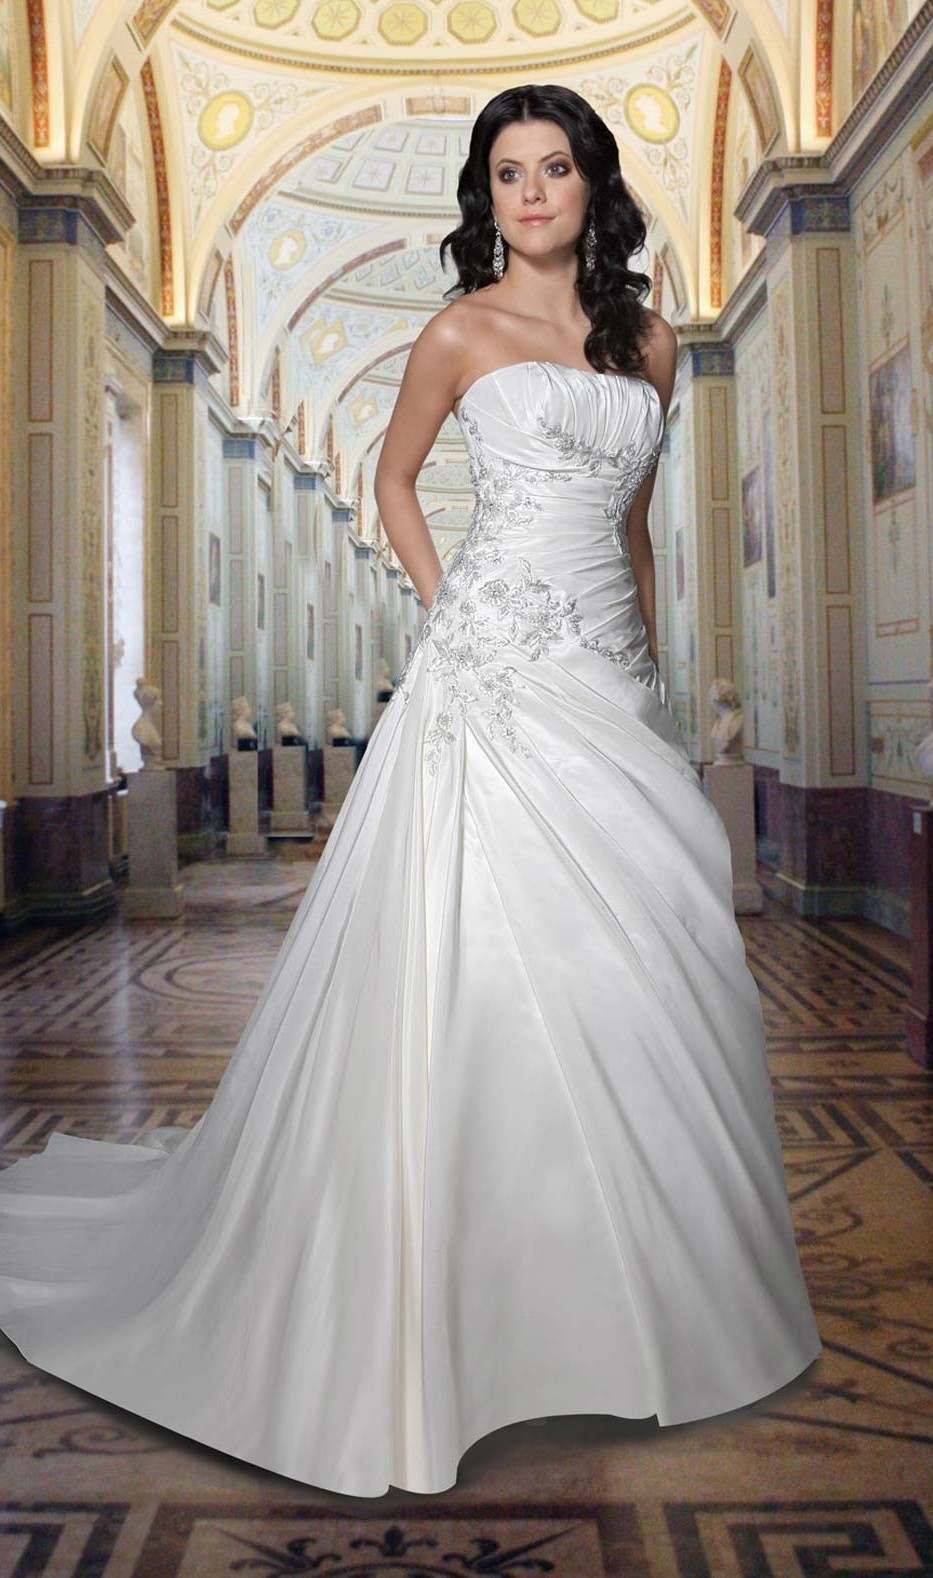 20 Superb Strapless Wedding Dresses Ideas Wohh Wedding 4463